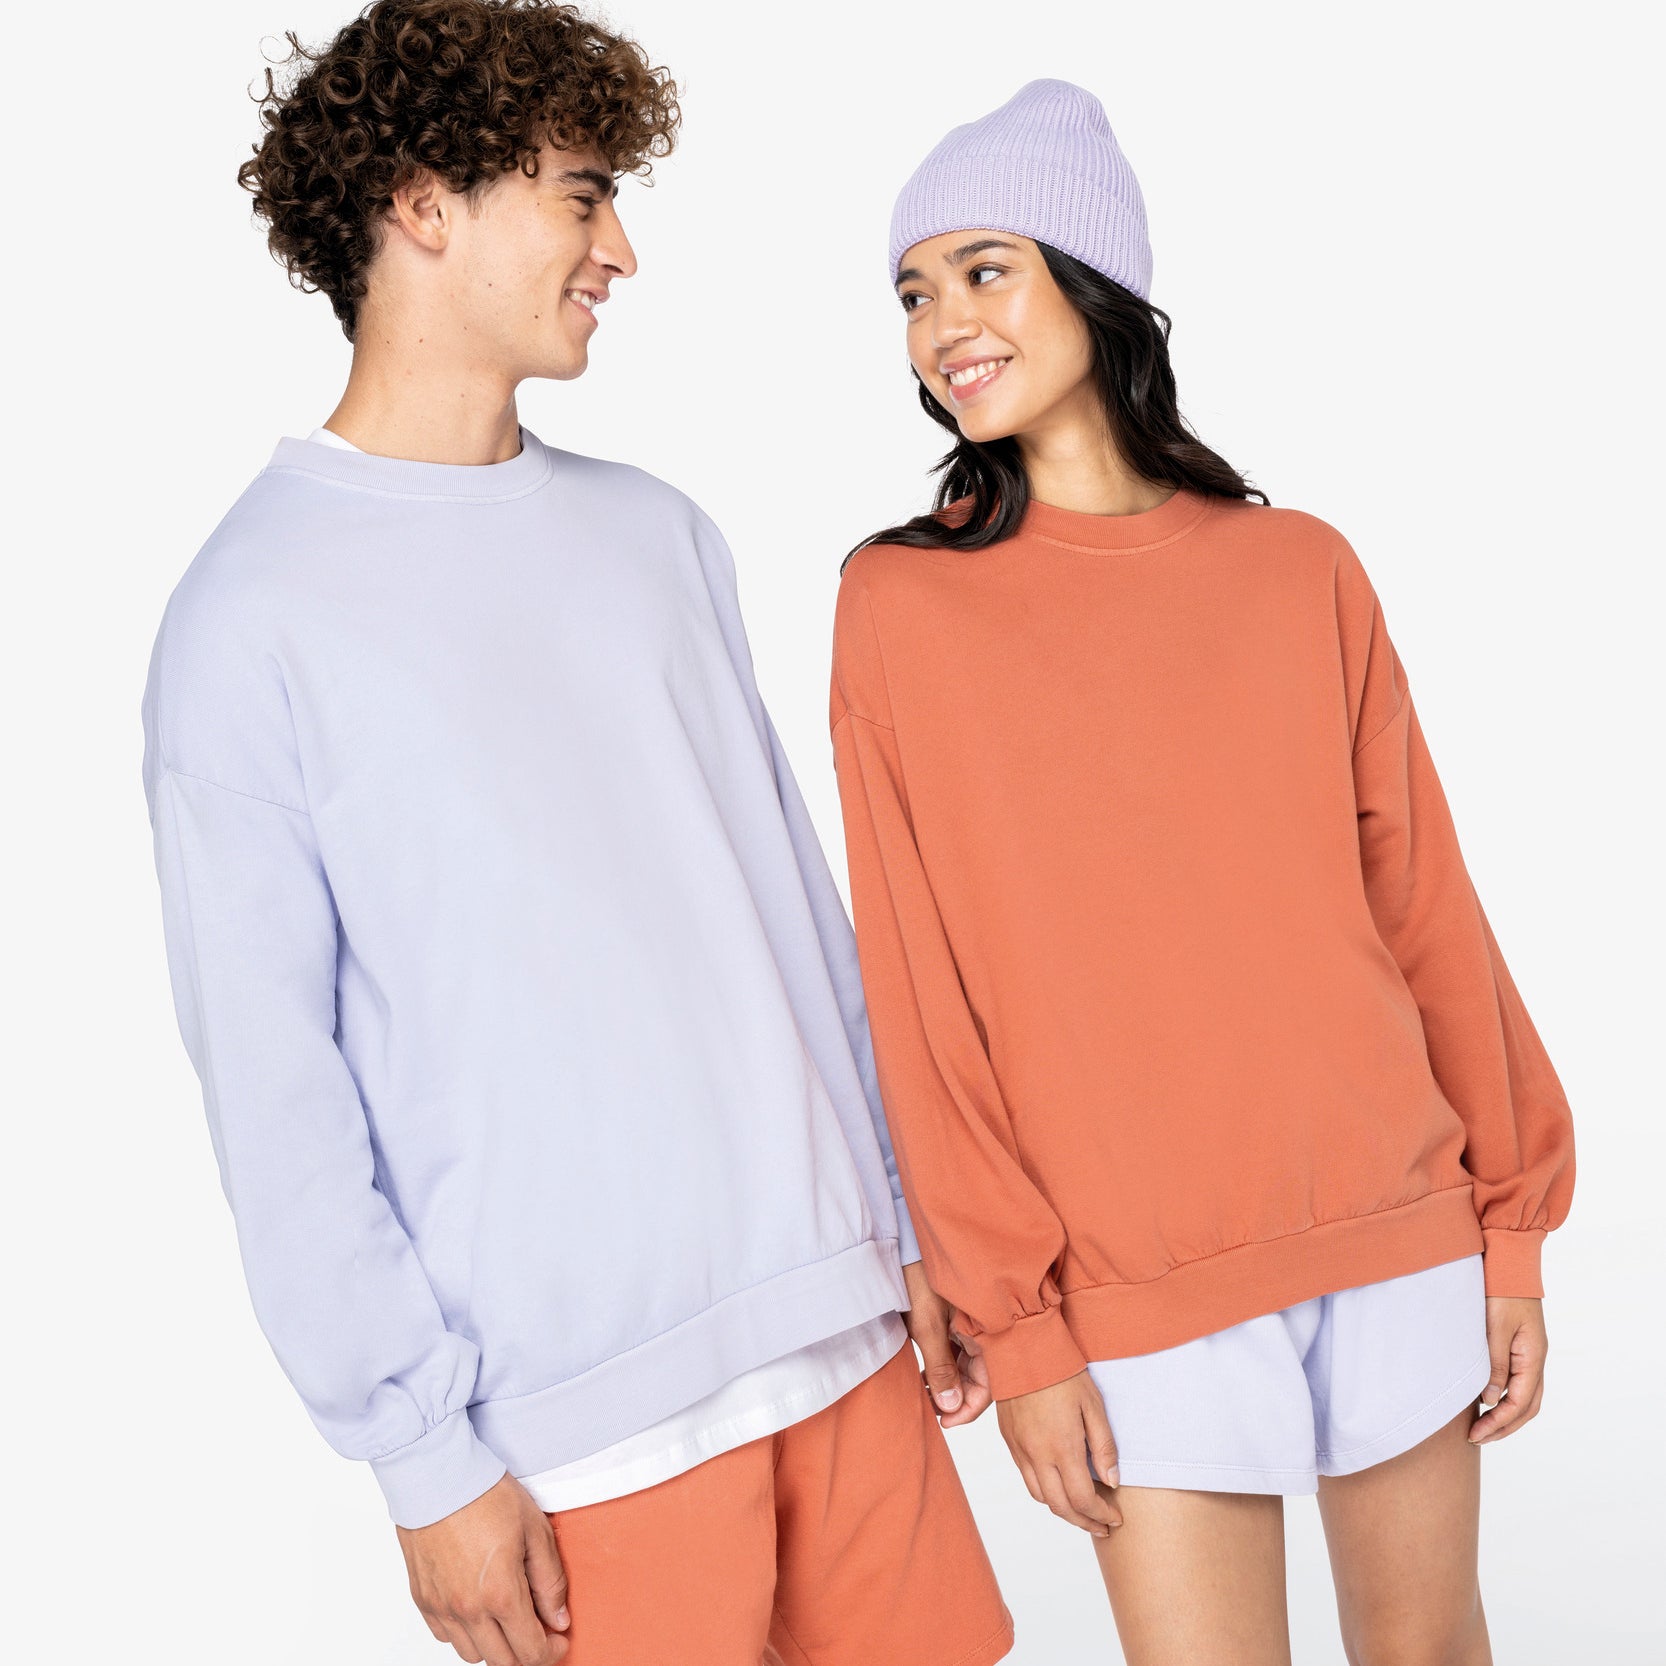 POSNS415 Eco-friendly unisex oversized French Terry sweatshirt